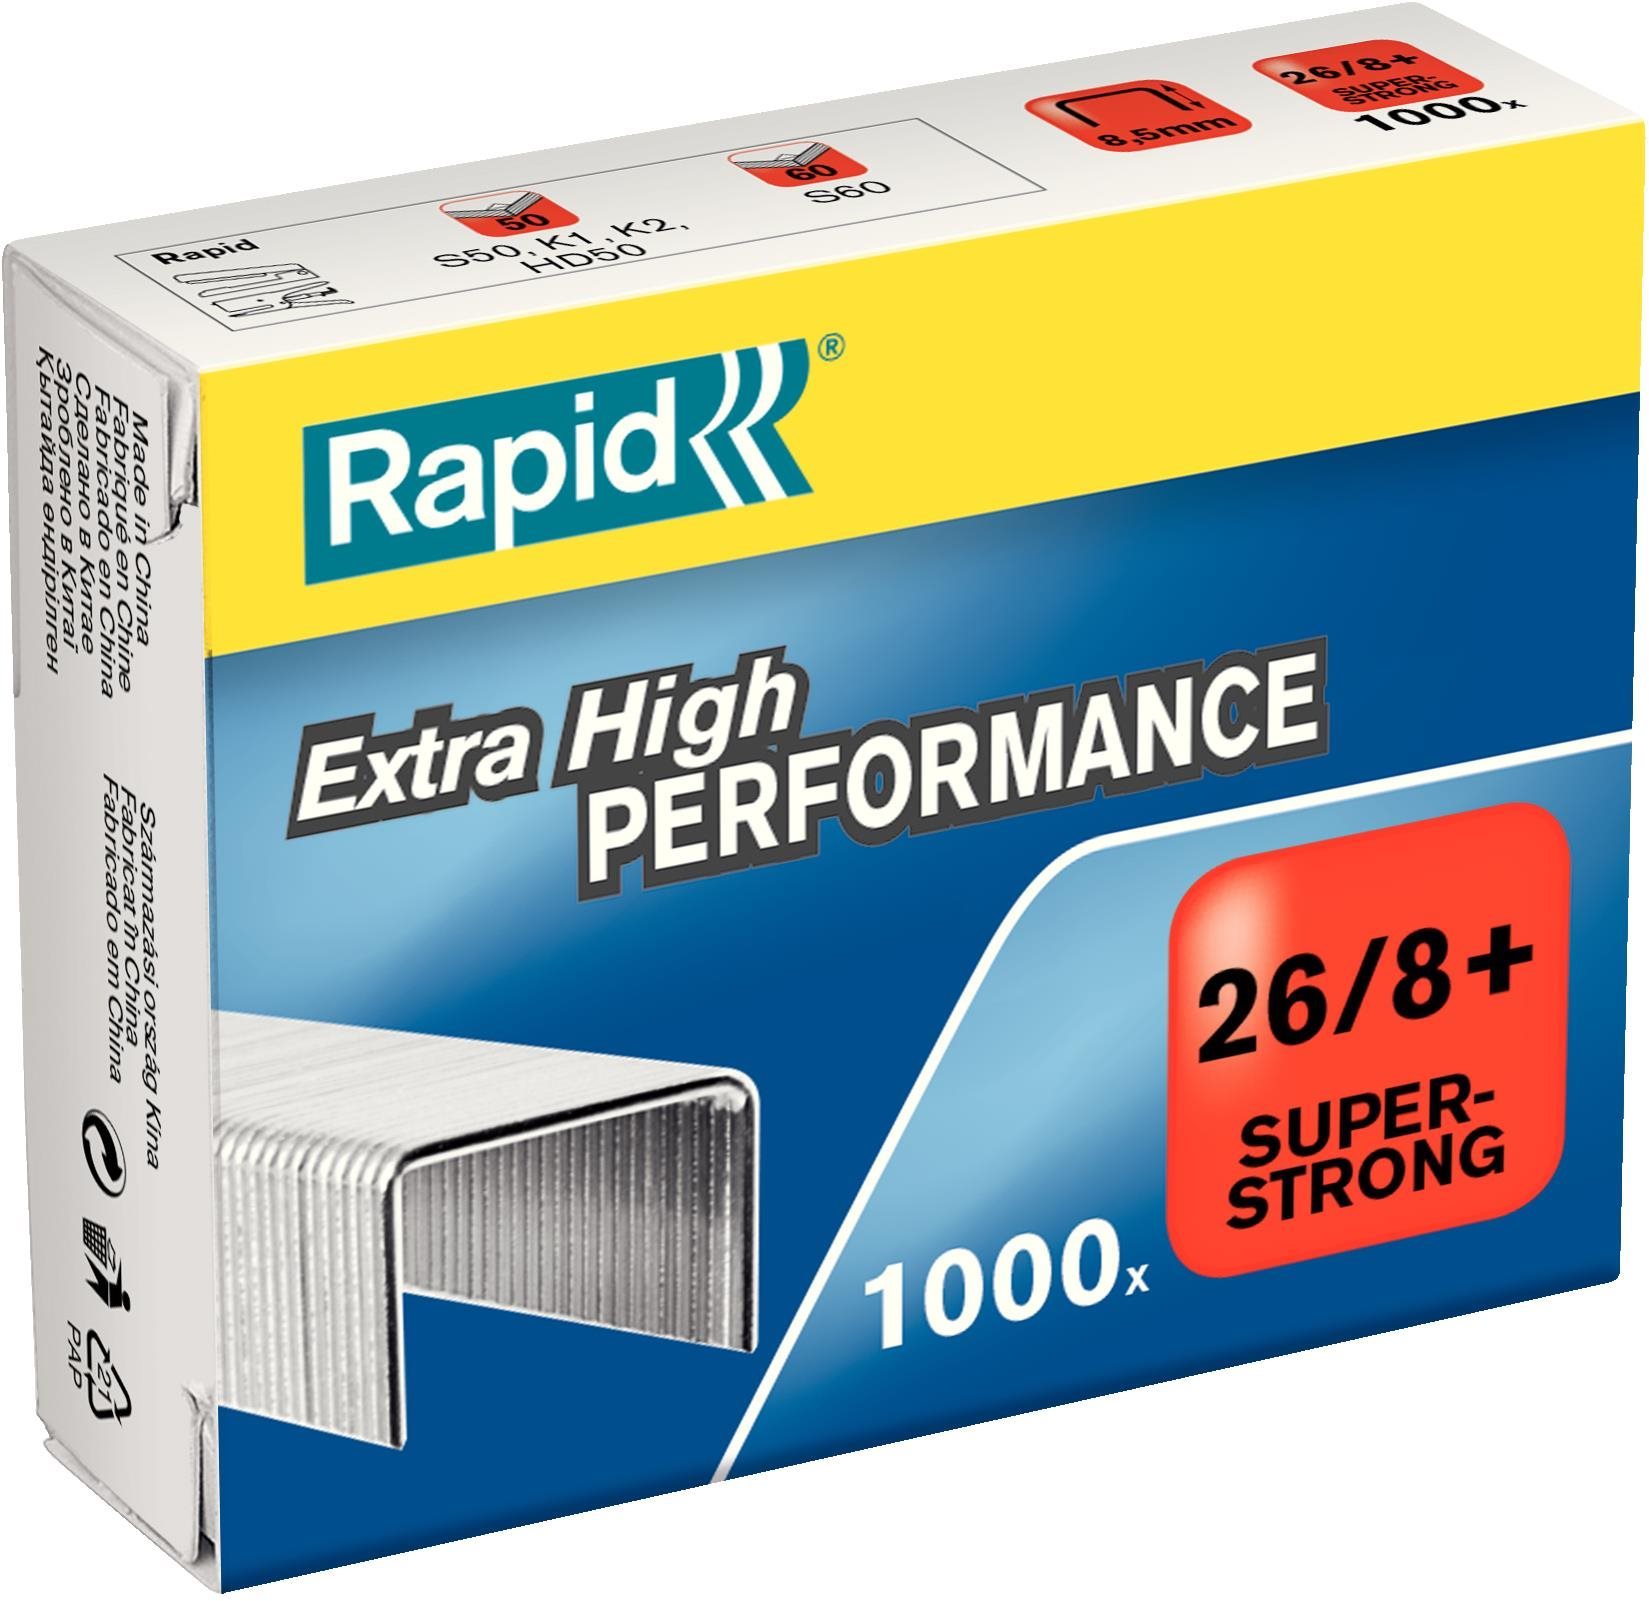 Rapid Super Strong 26/8+ - 1000 db-os csomagban